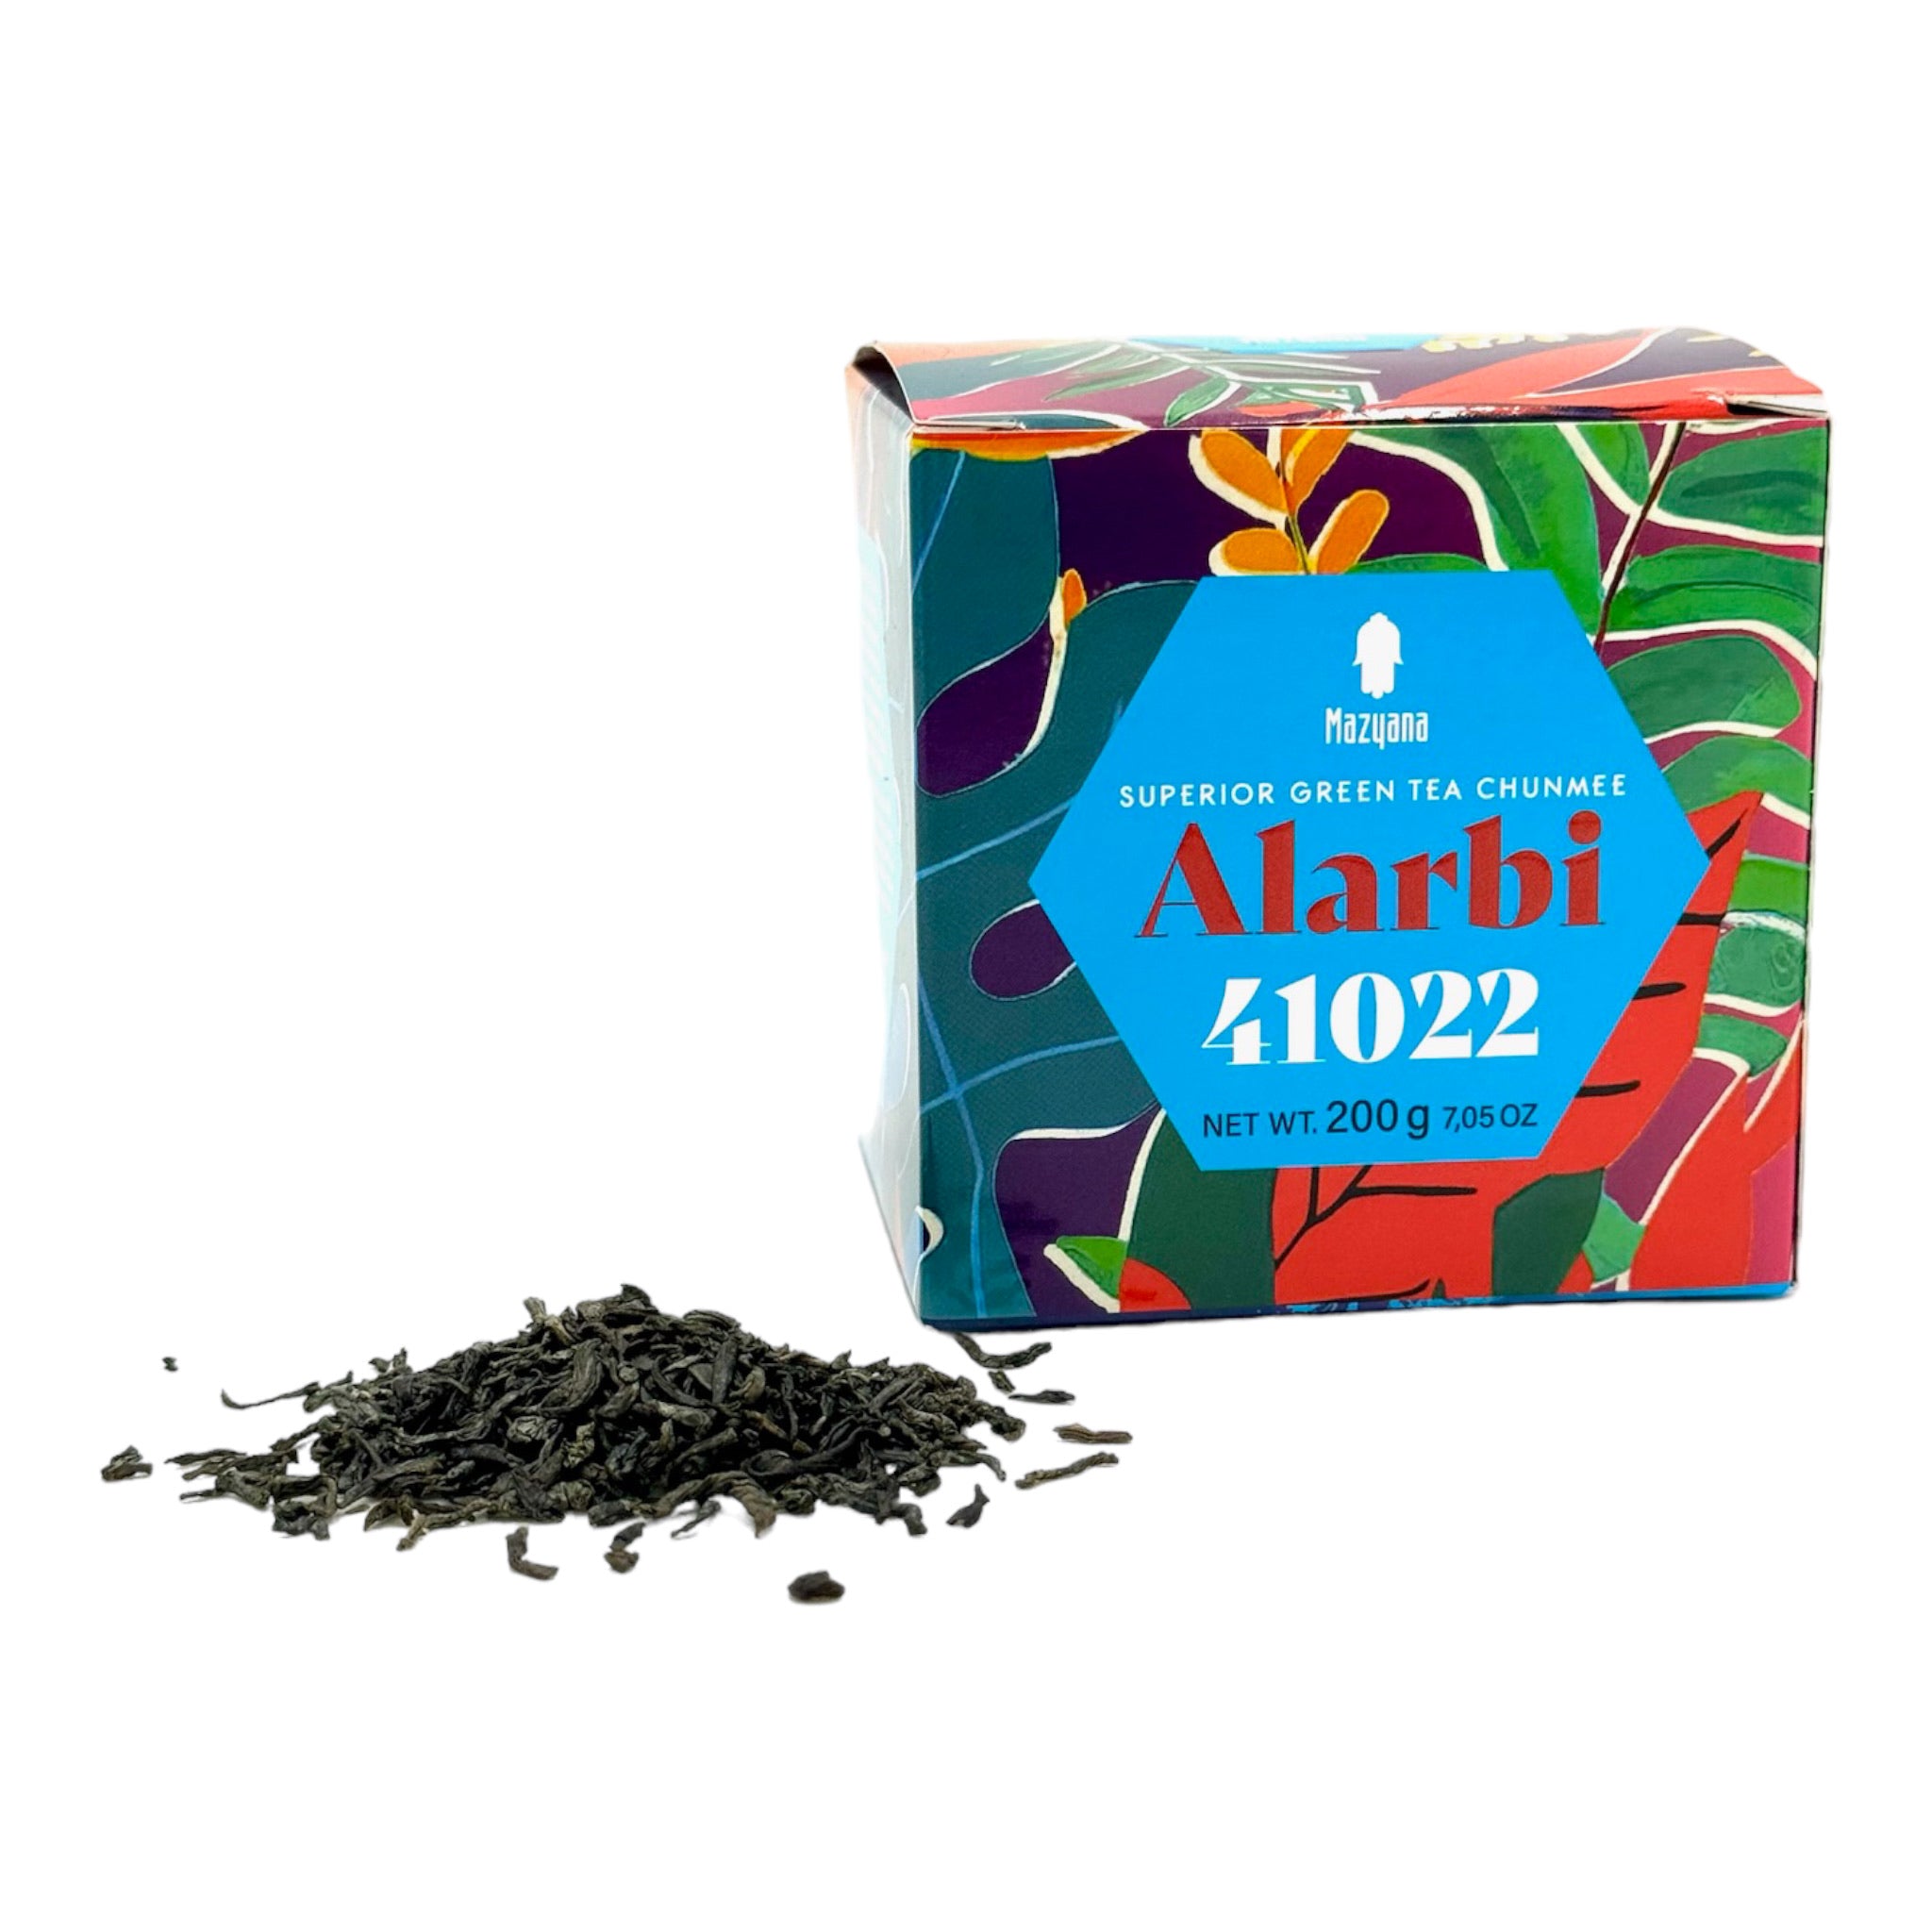 alarbi gunpowder green tea for moroccan mint tea by mazyana brand 